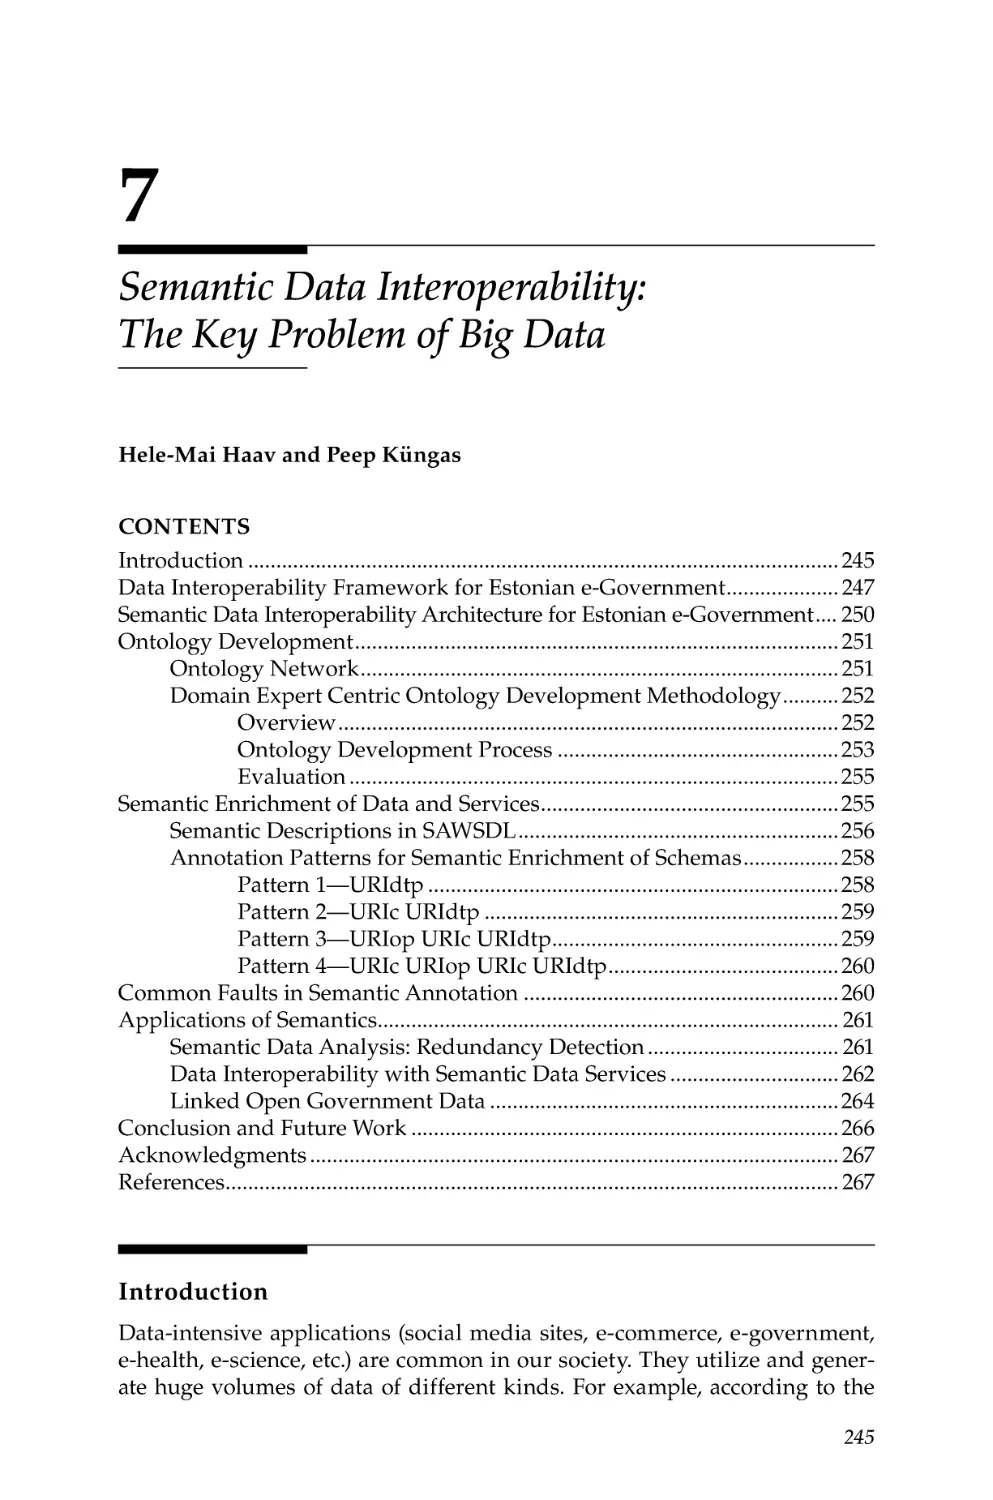 7. Semantic Data Interoperability